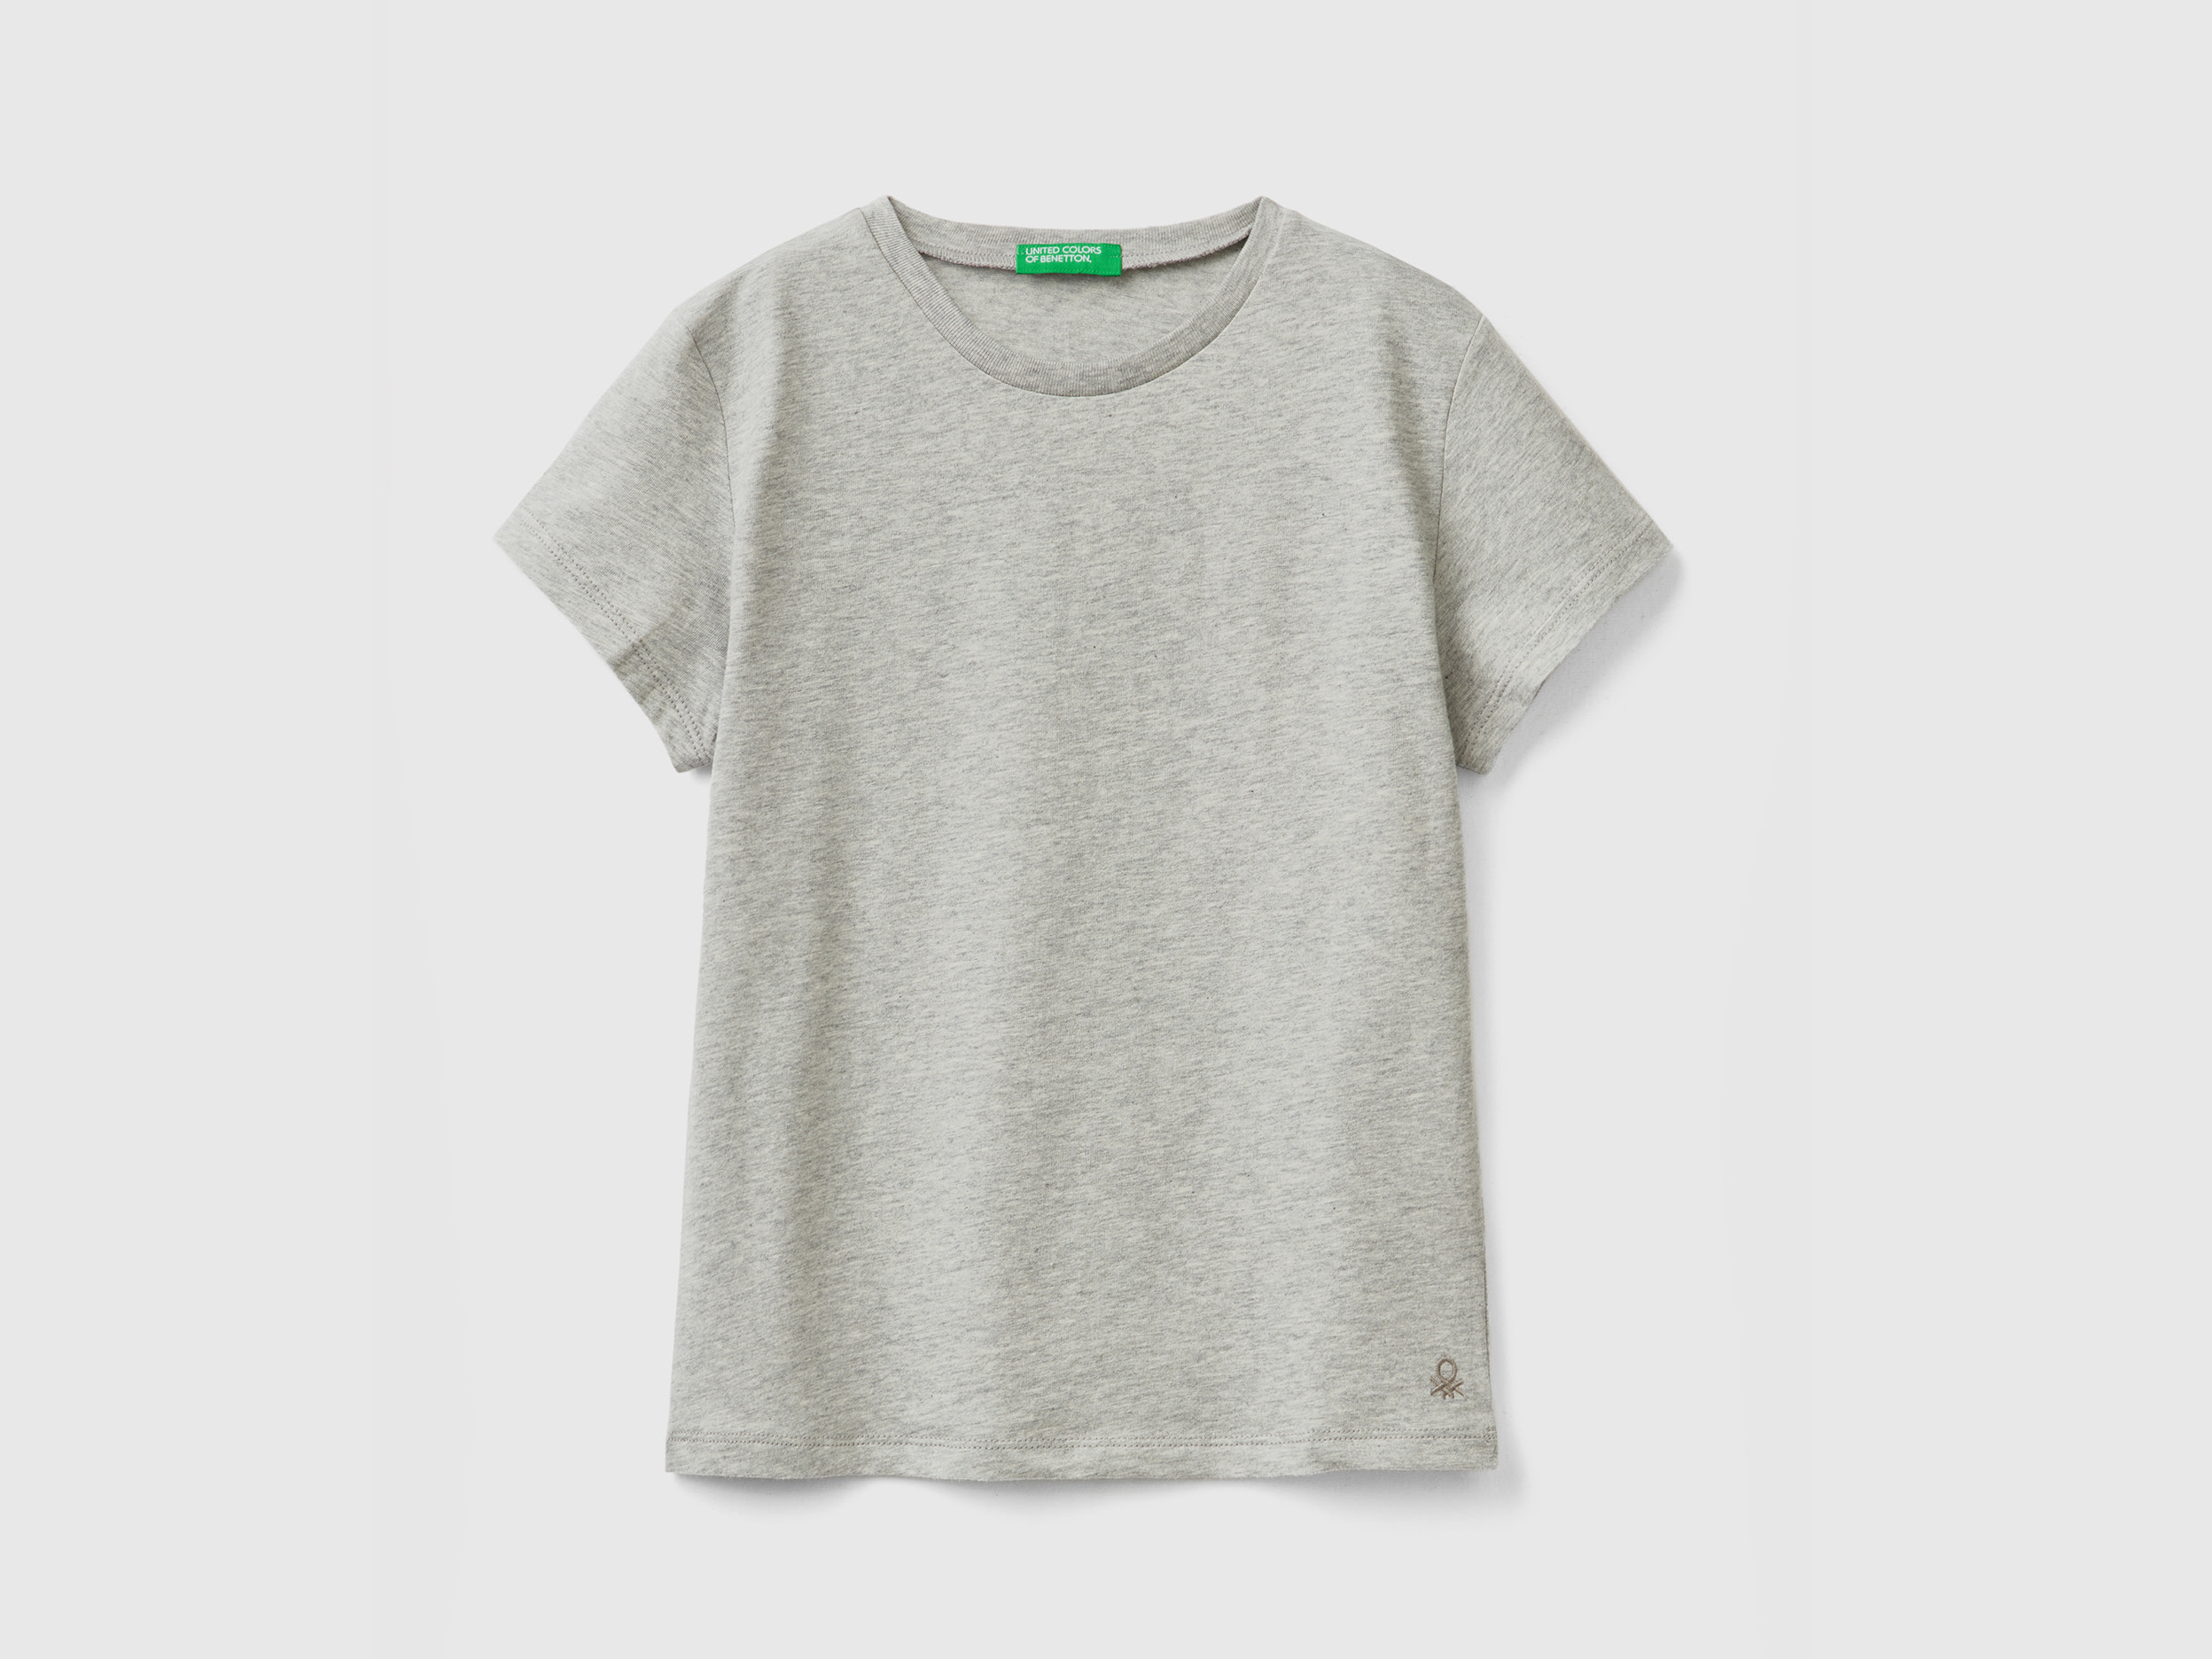 Benetton, T-shirt In Pure Organic Cotton, size 2XL, Light Gray, Kids